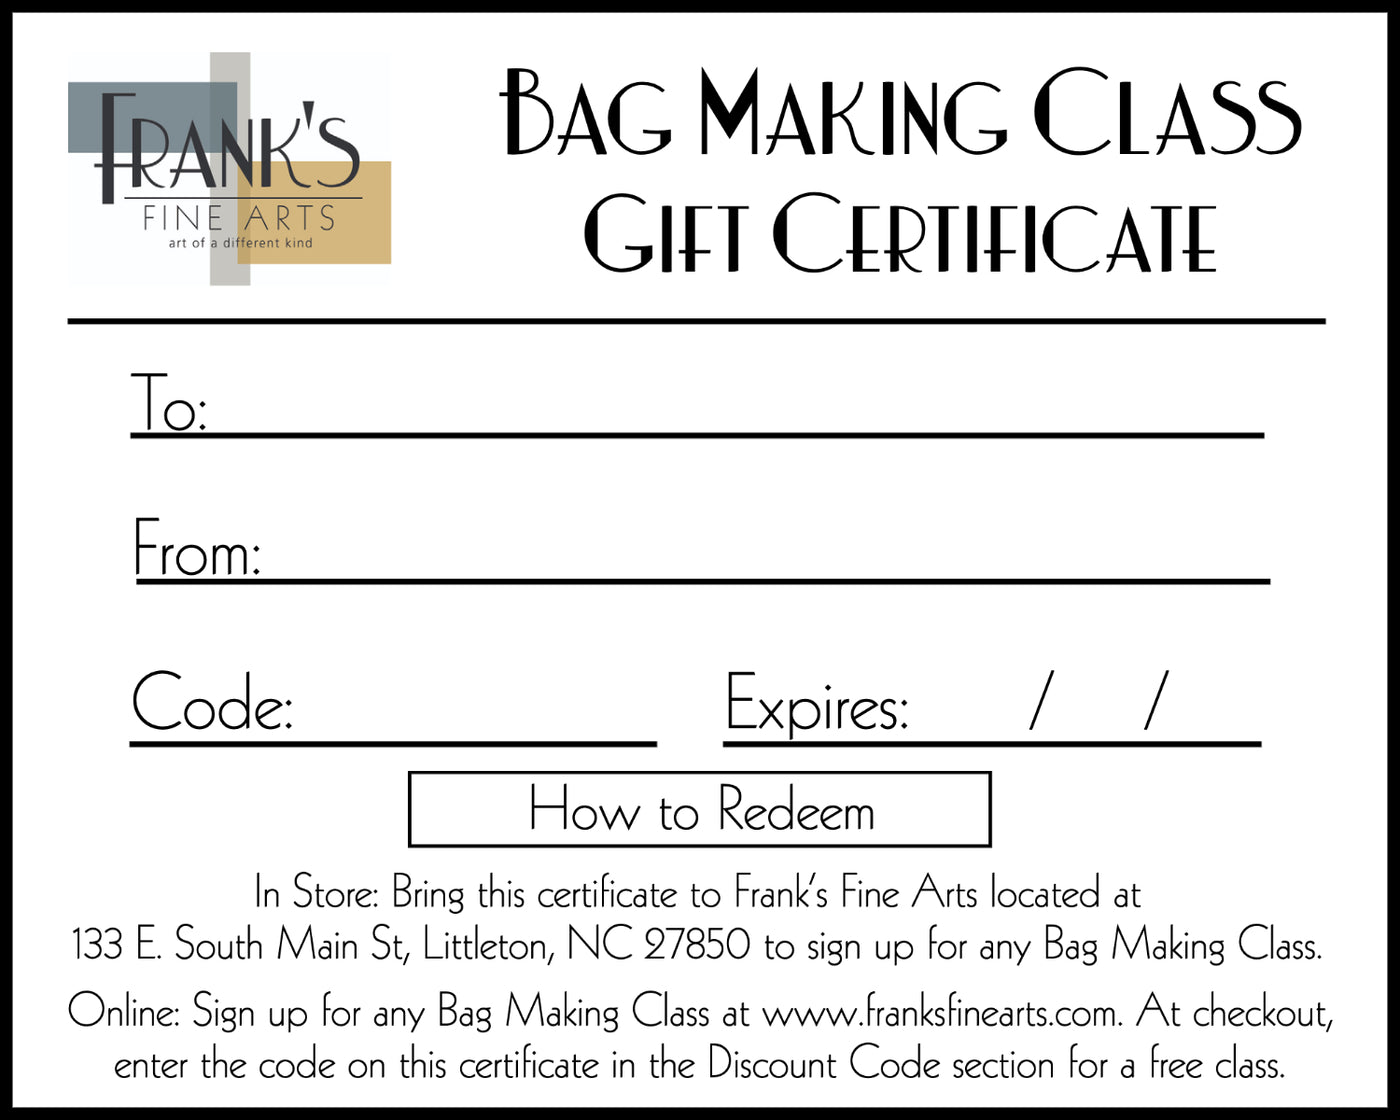 Bag Making Class Gift Certificate